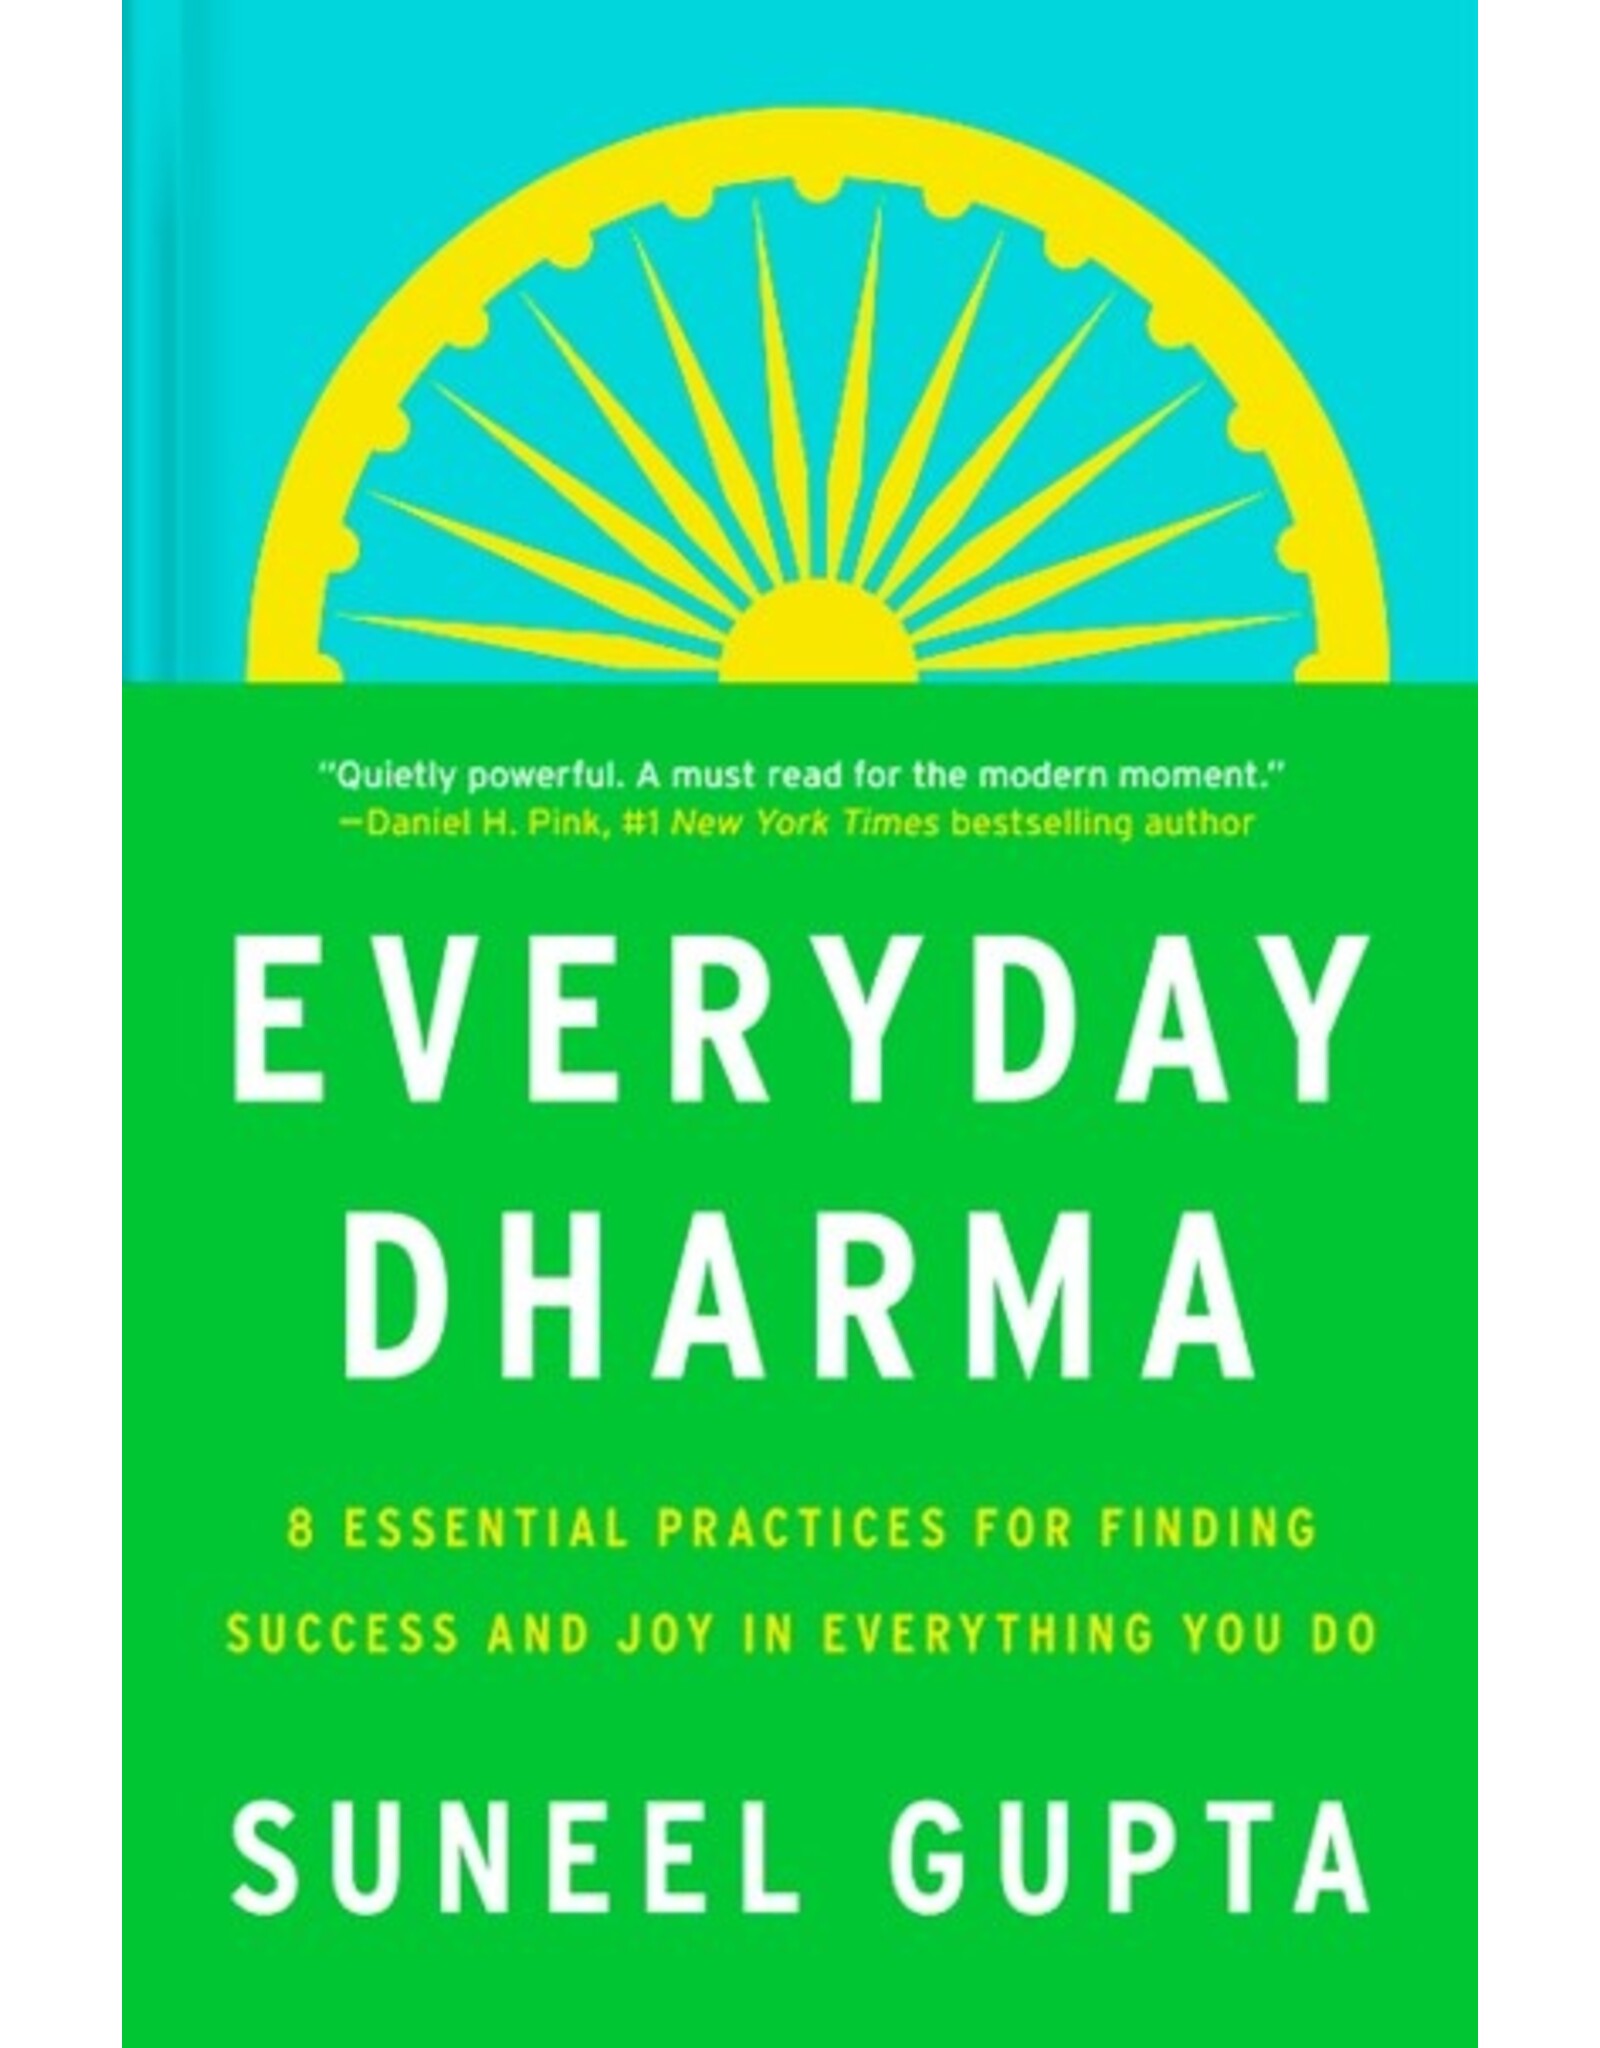 Books Everyday Dharma by Suneel Gupta